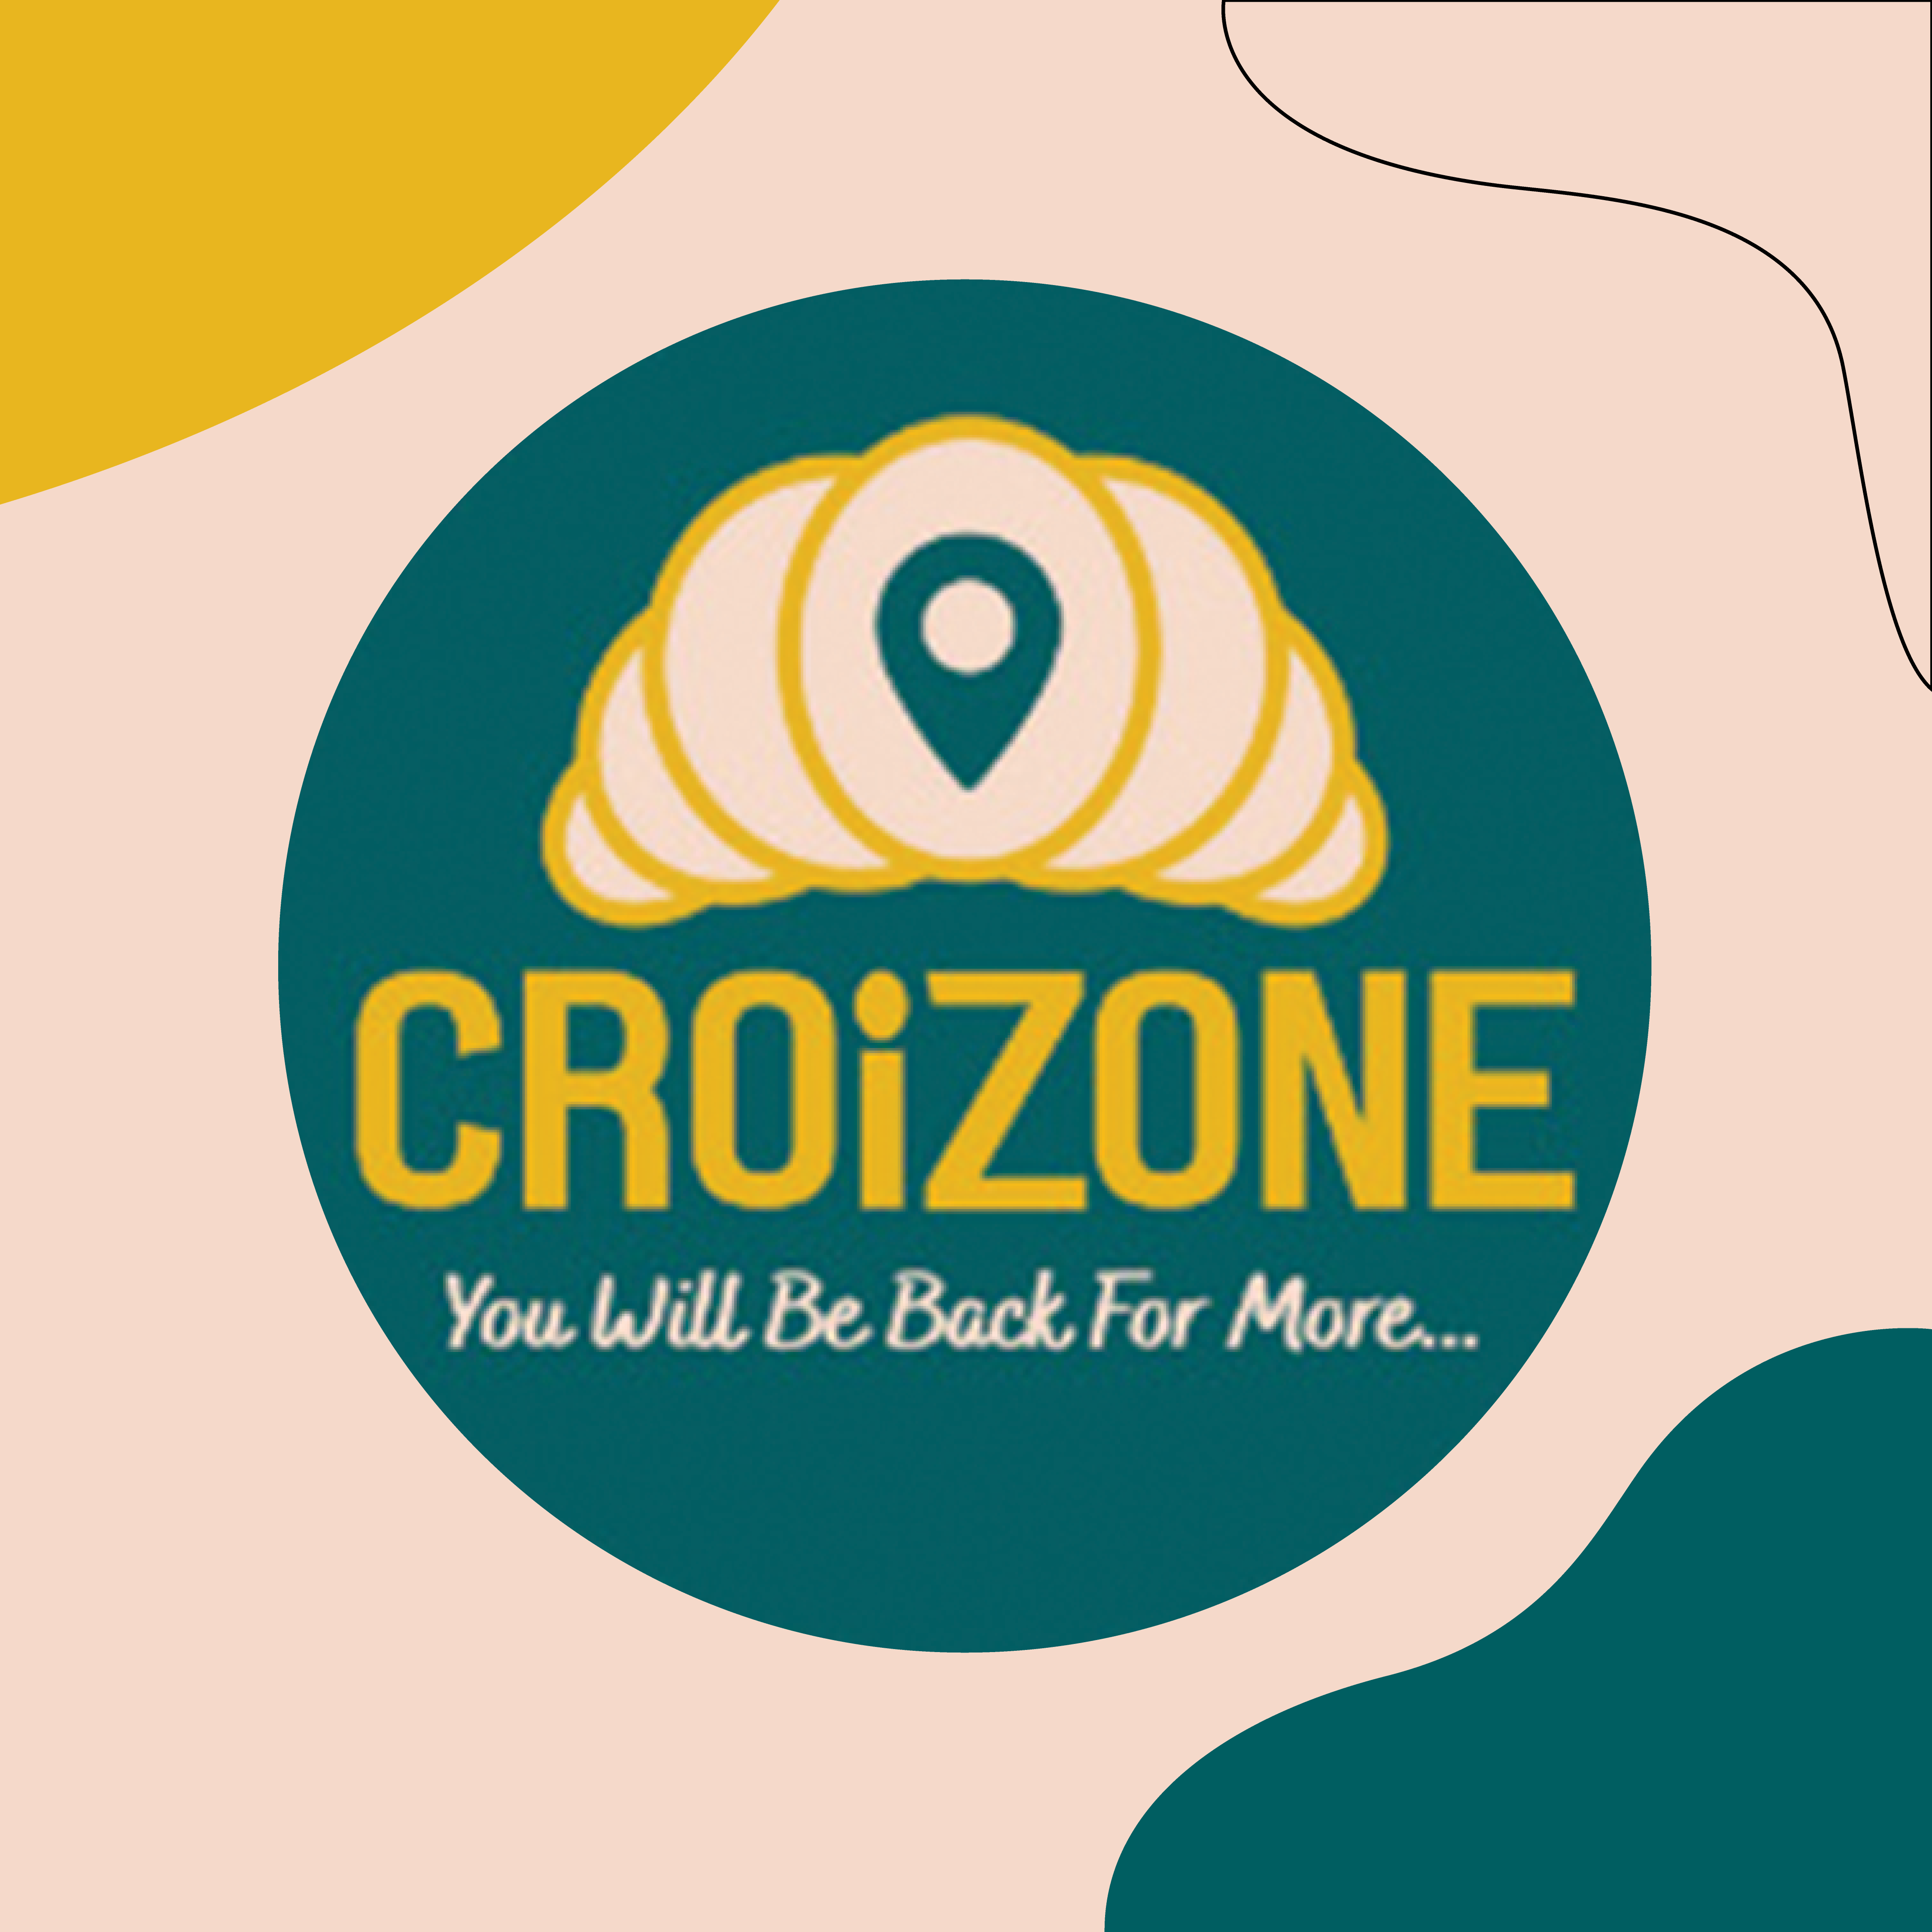 Croizone – marketing for restaurant